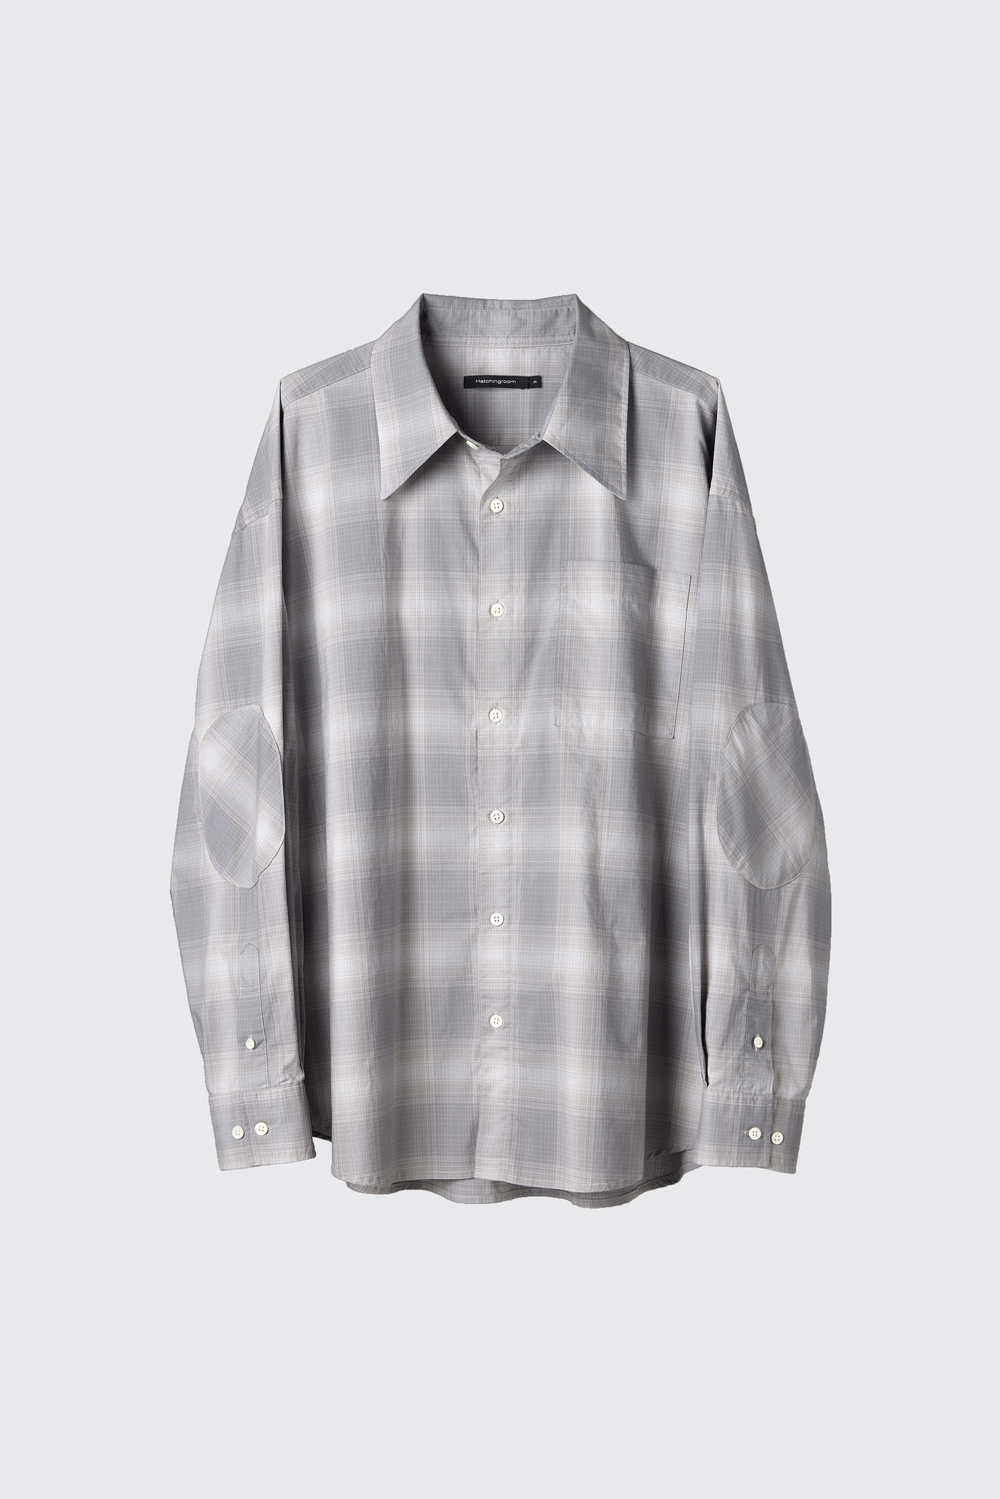 Archive Shirt V2 Cool Grey Check